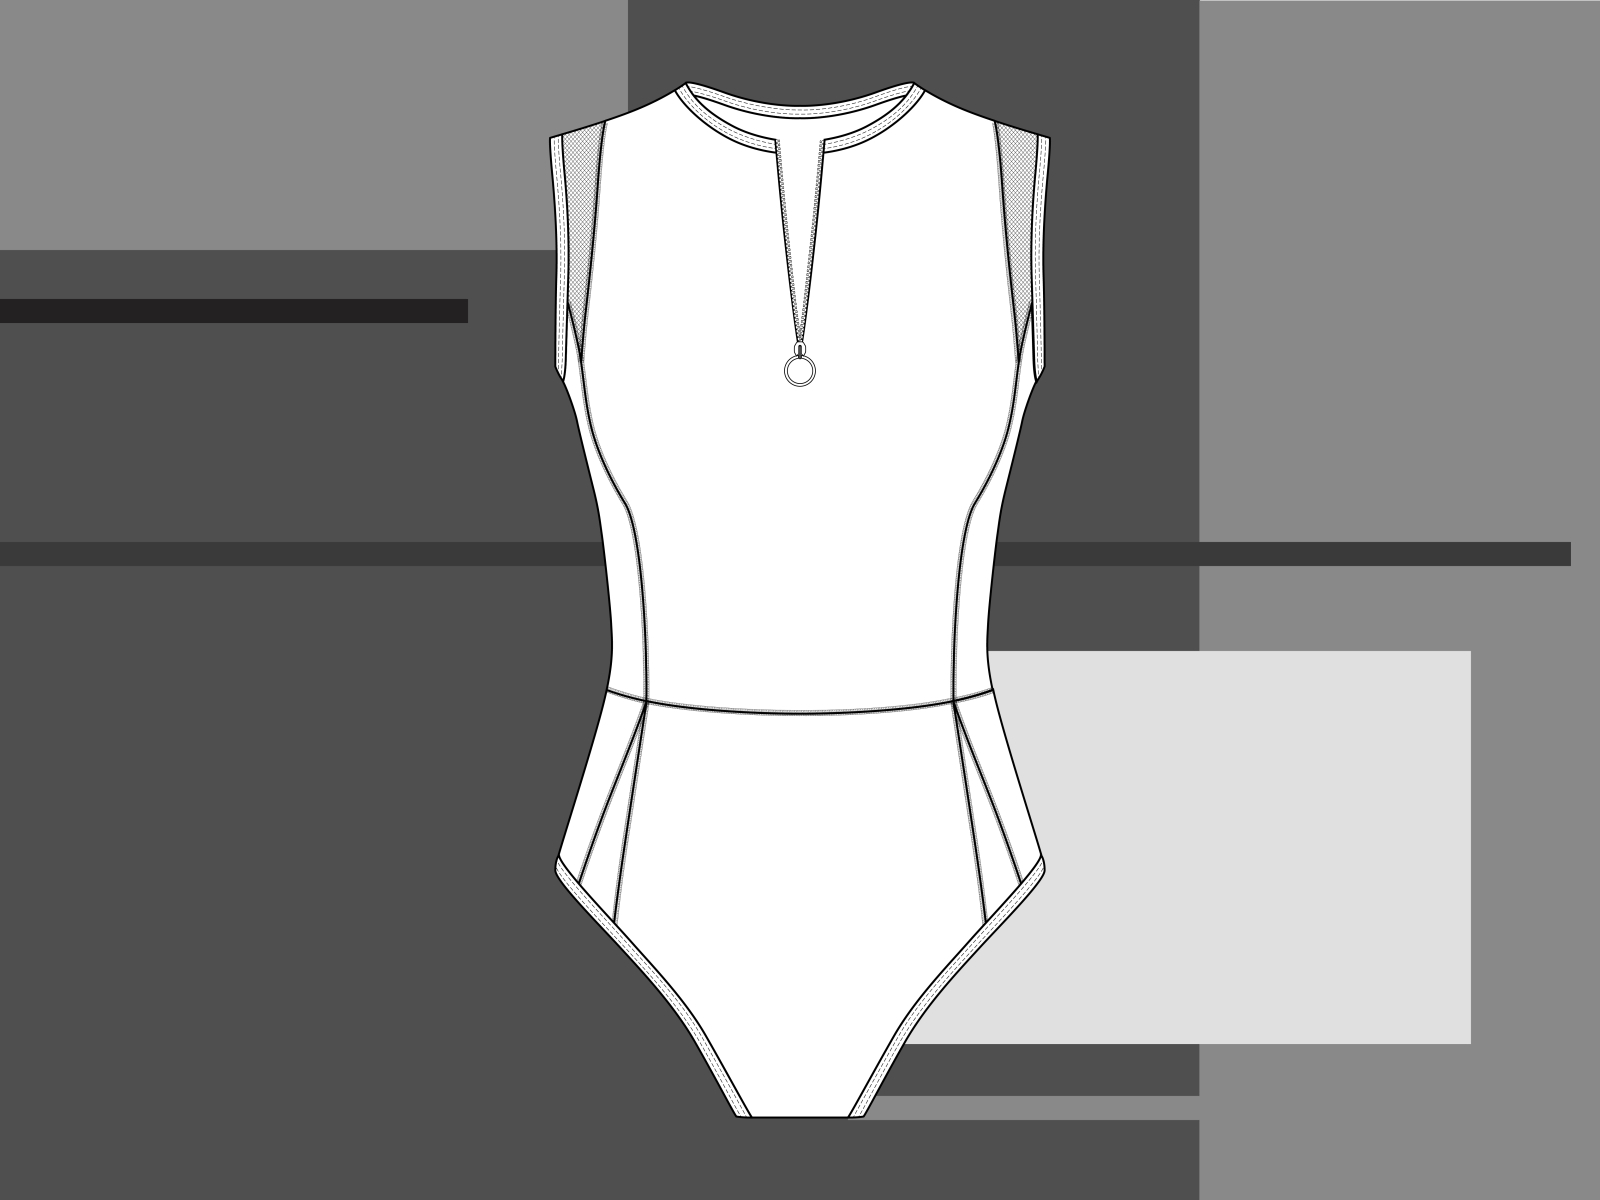 1711 Sketch Swim Suit Woman Images Stock Photos  Vectors  Shutterstock